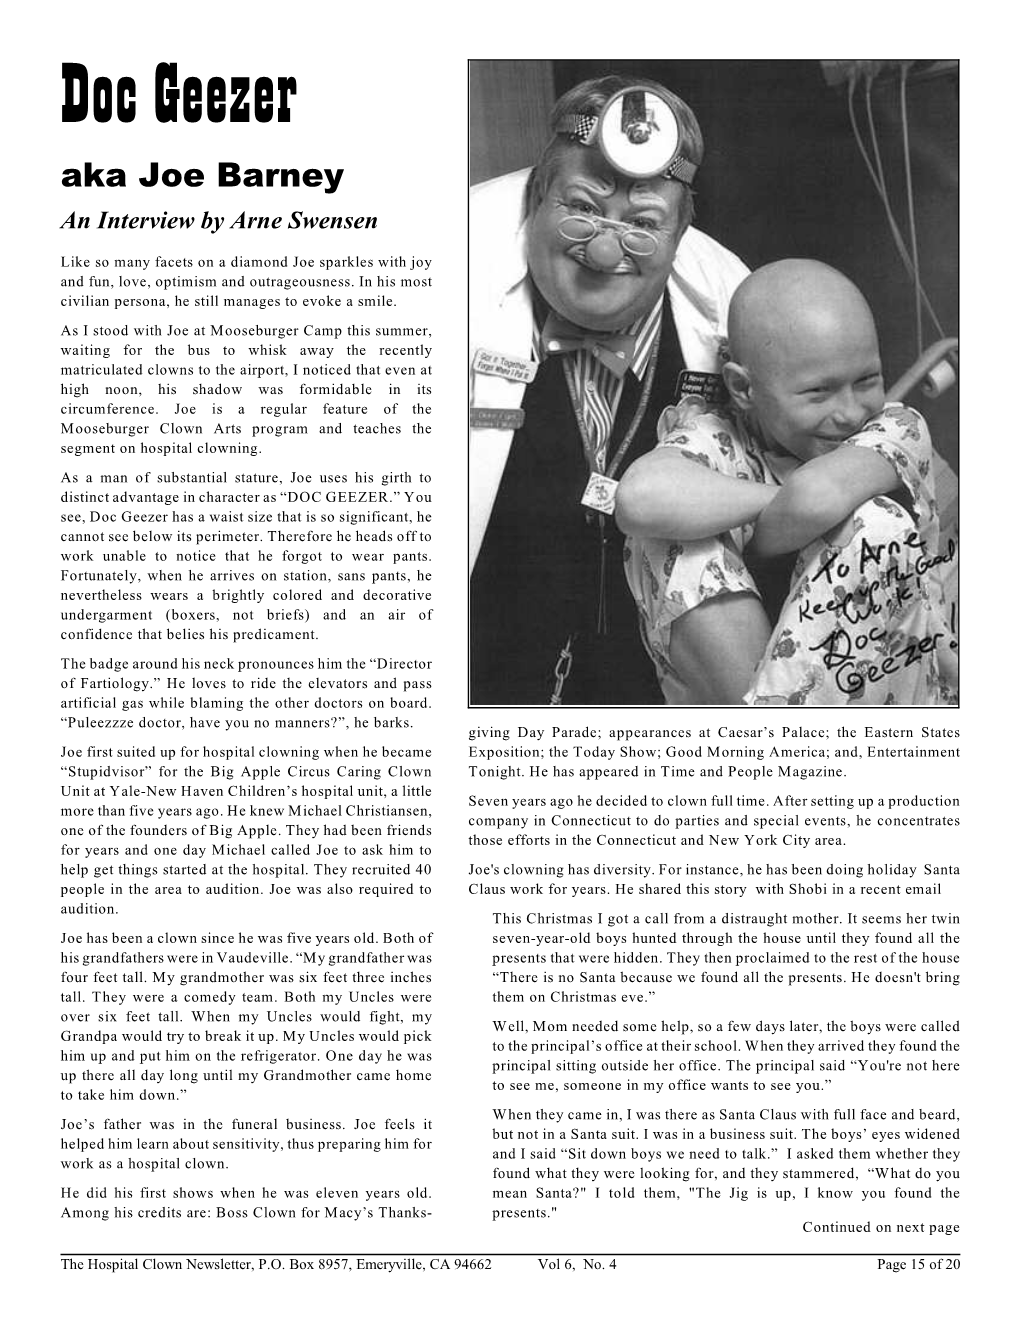 Doc Geezer Aka Joe Barney an Interview by Arne Swensen